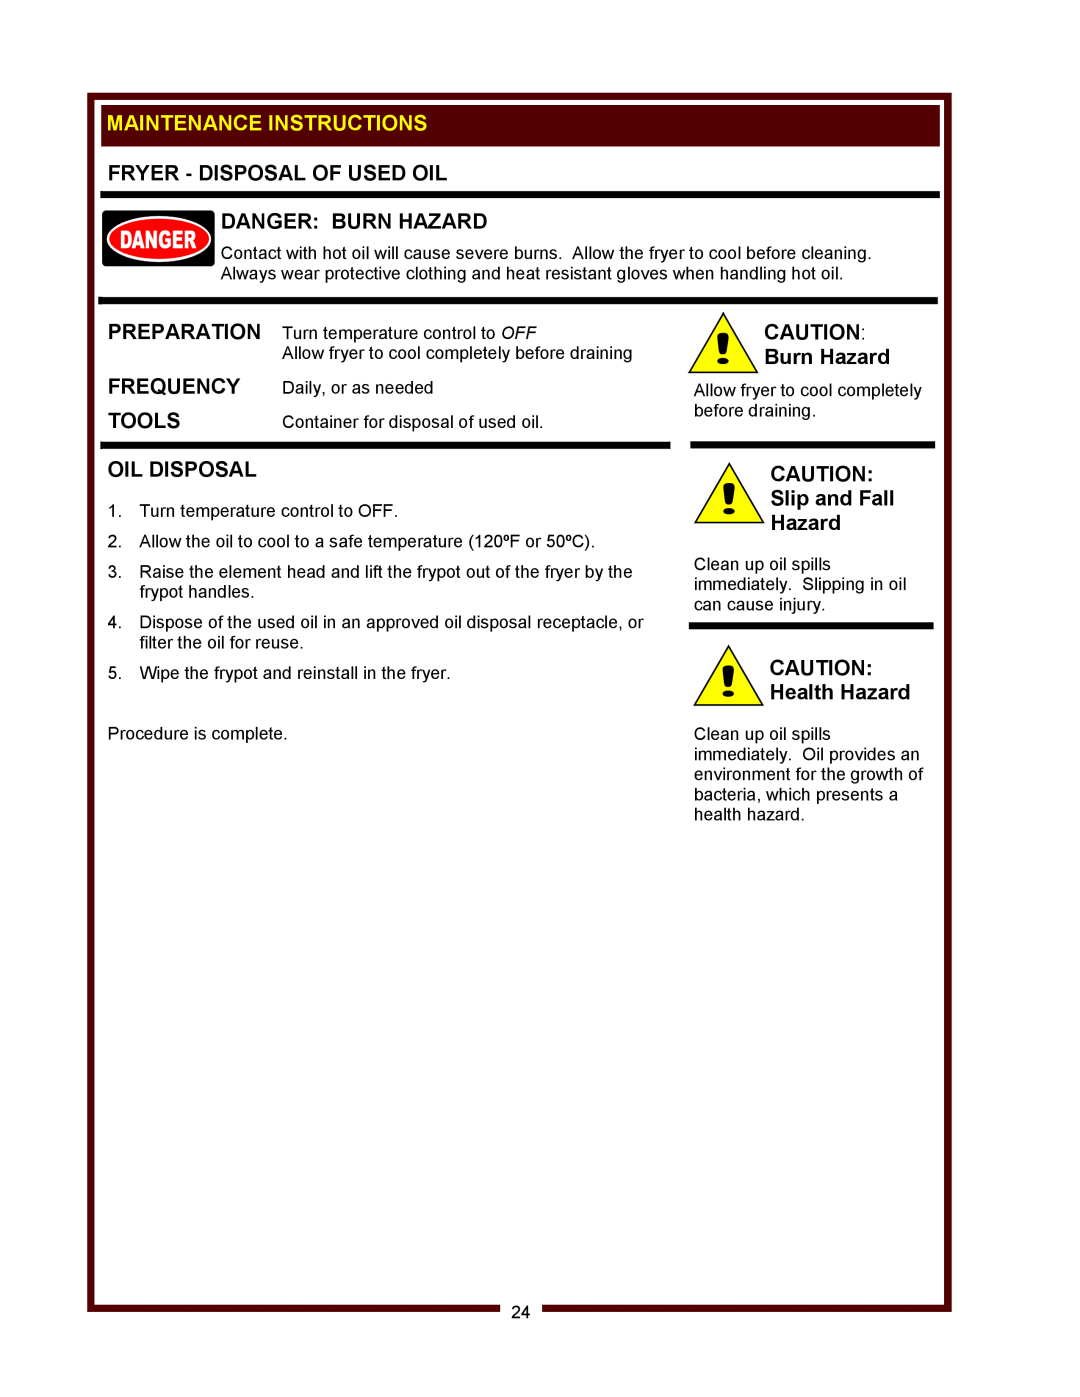 Wells WV-FGRW Maintenance Instructions, Fryer - Disposal Of Used Oil Danger Burn Hazard, Oil Disposal, Health Hazard 